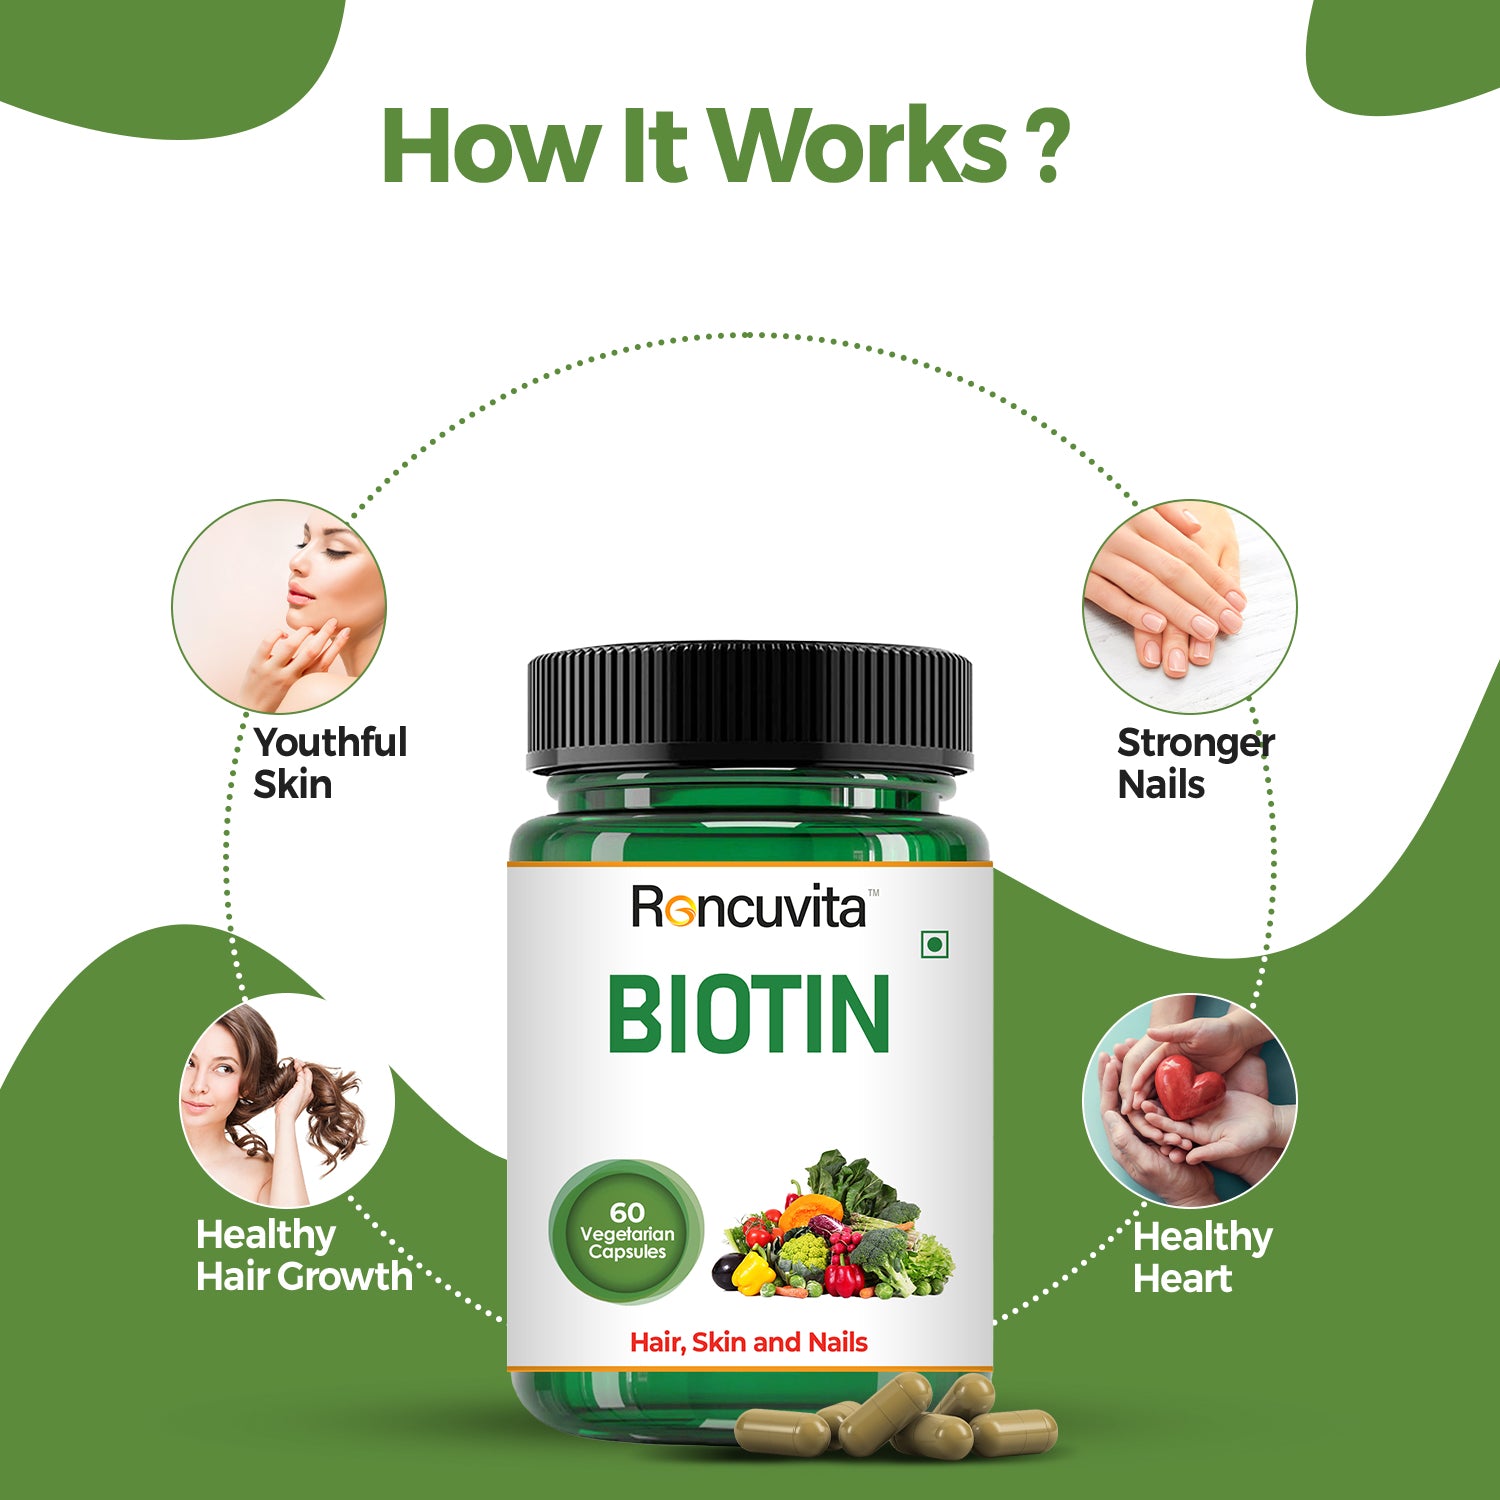 Biotin Rich Foods for Vegetarians